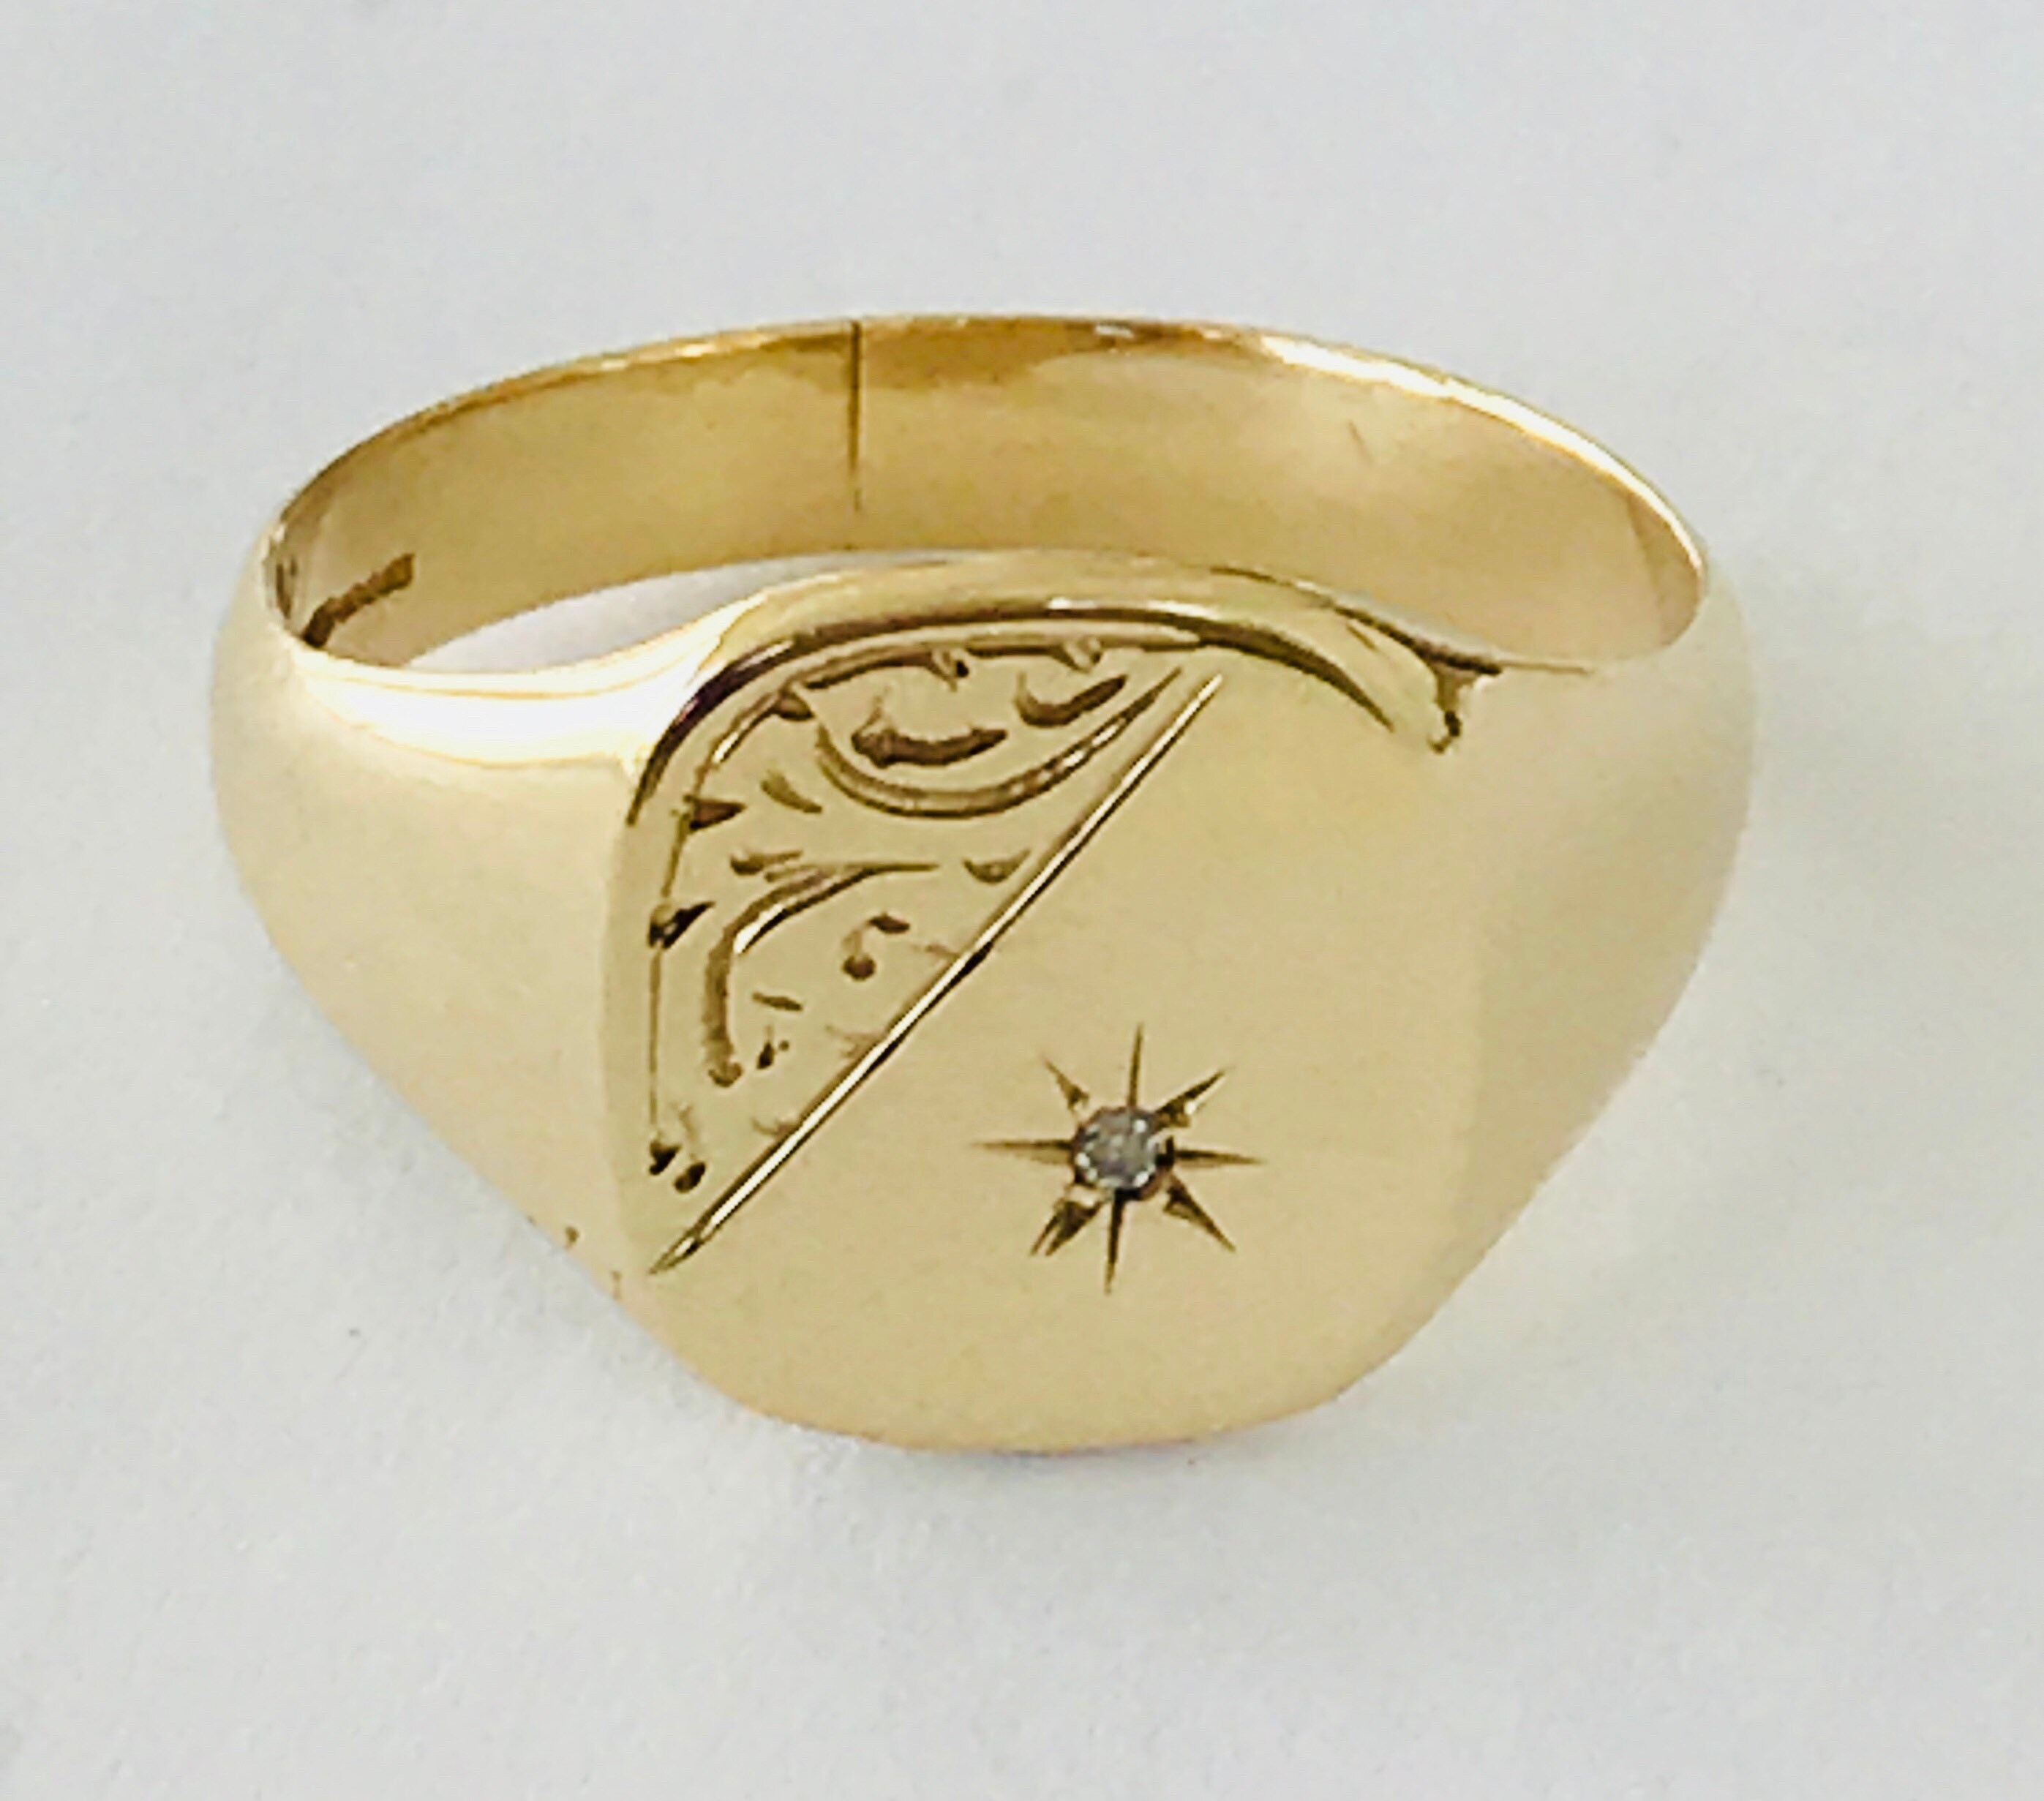 Superb vintage 9ct yellow gold Diamond signet ring - fully hallmarked